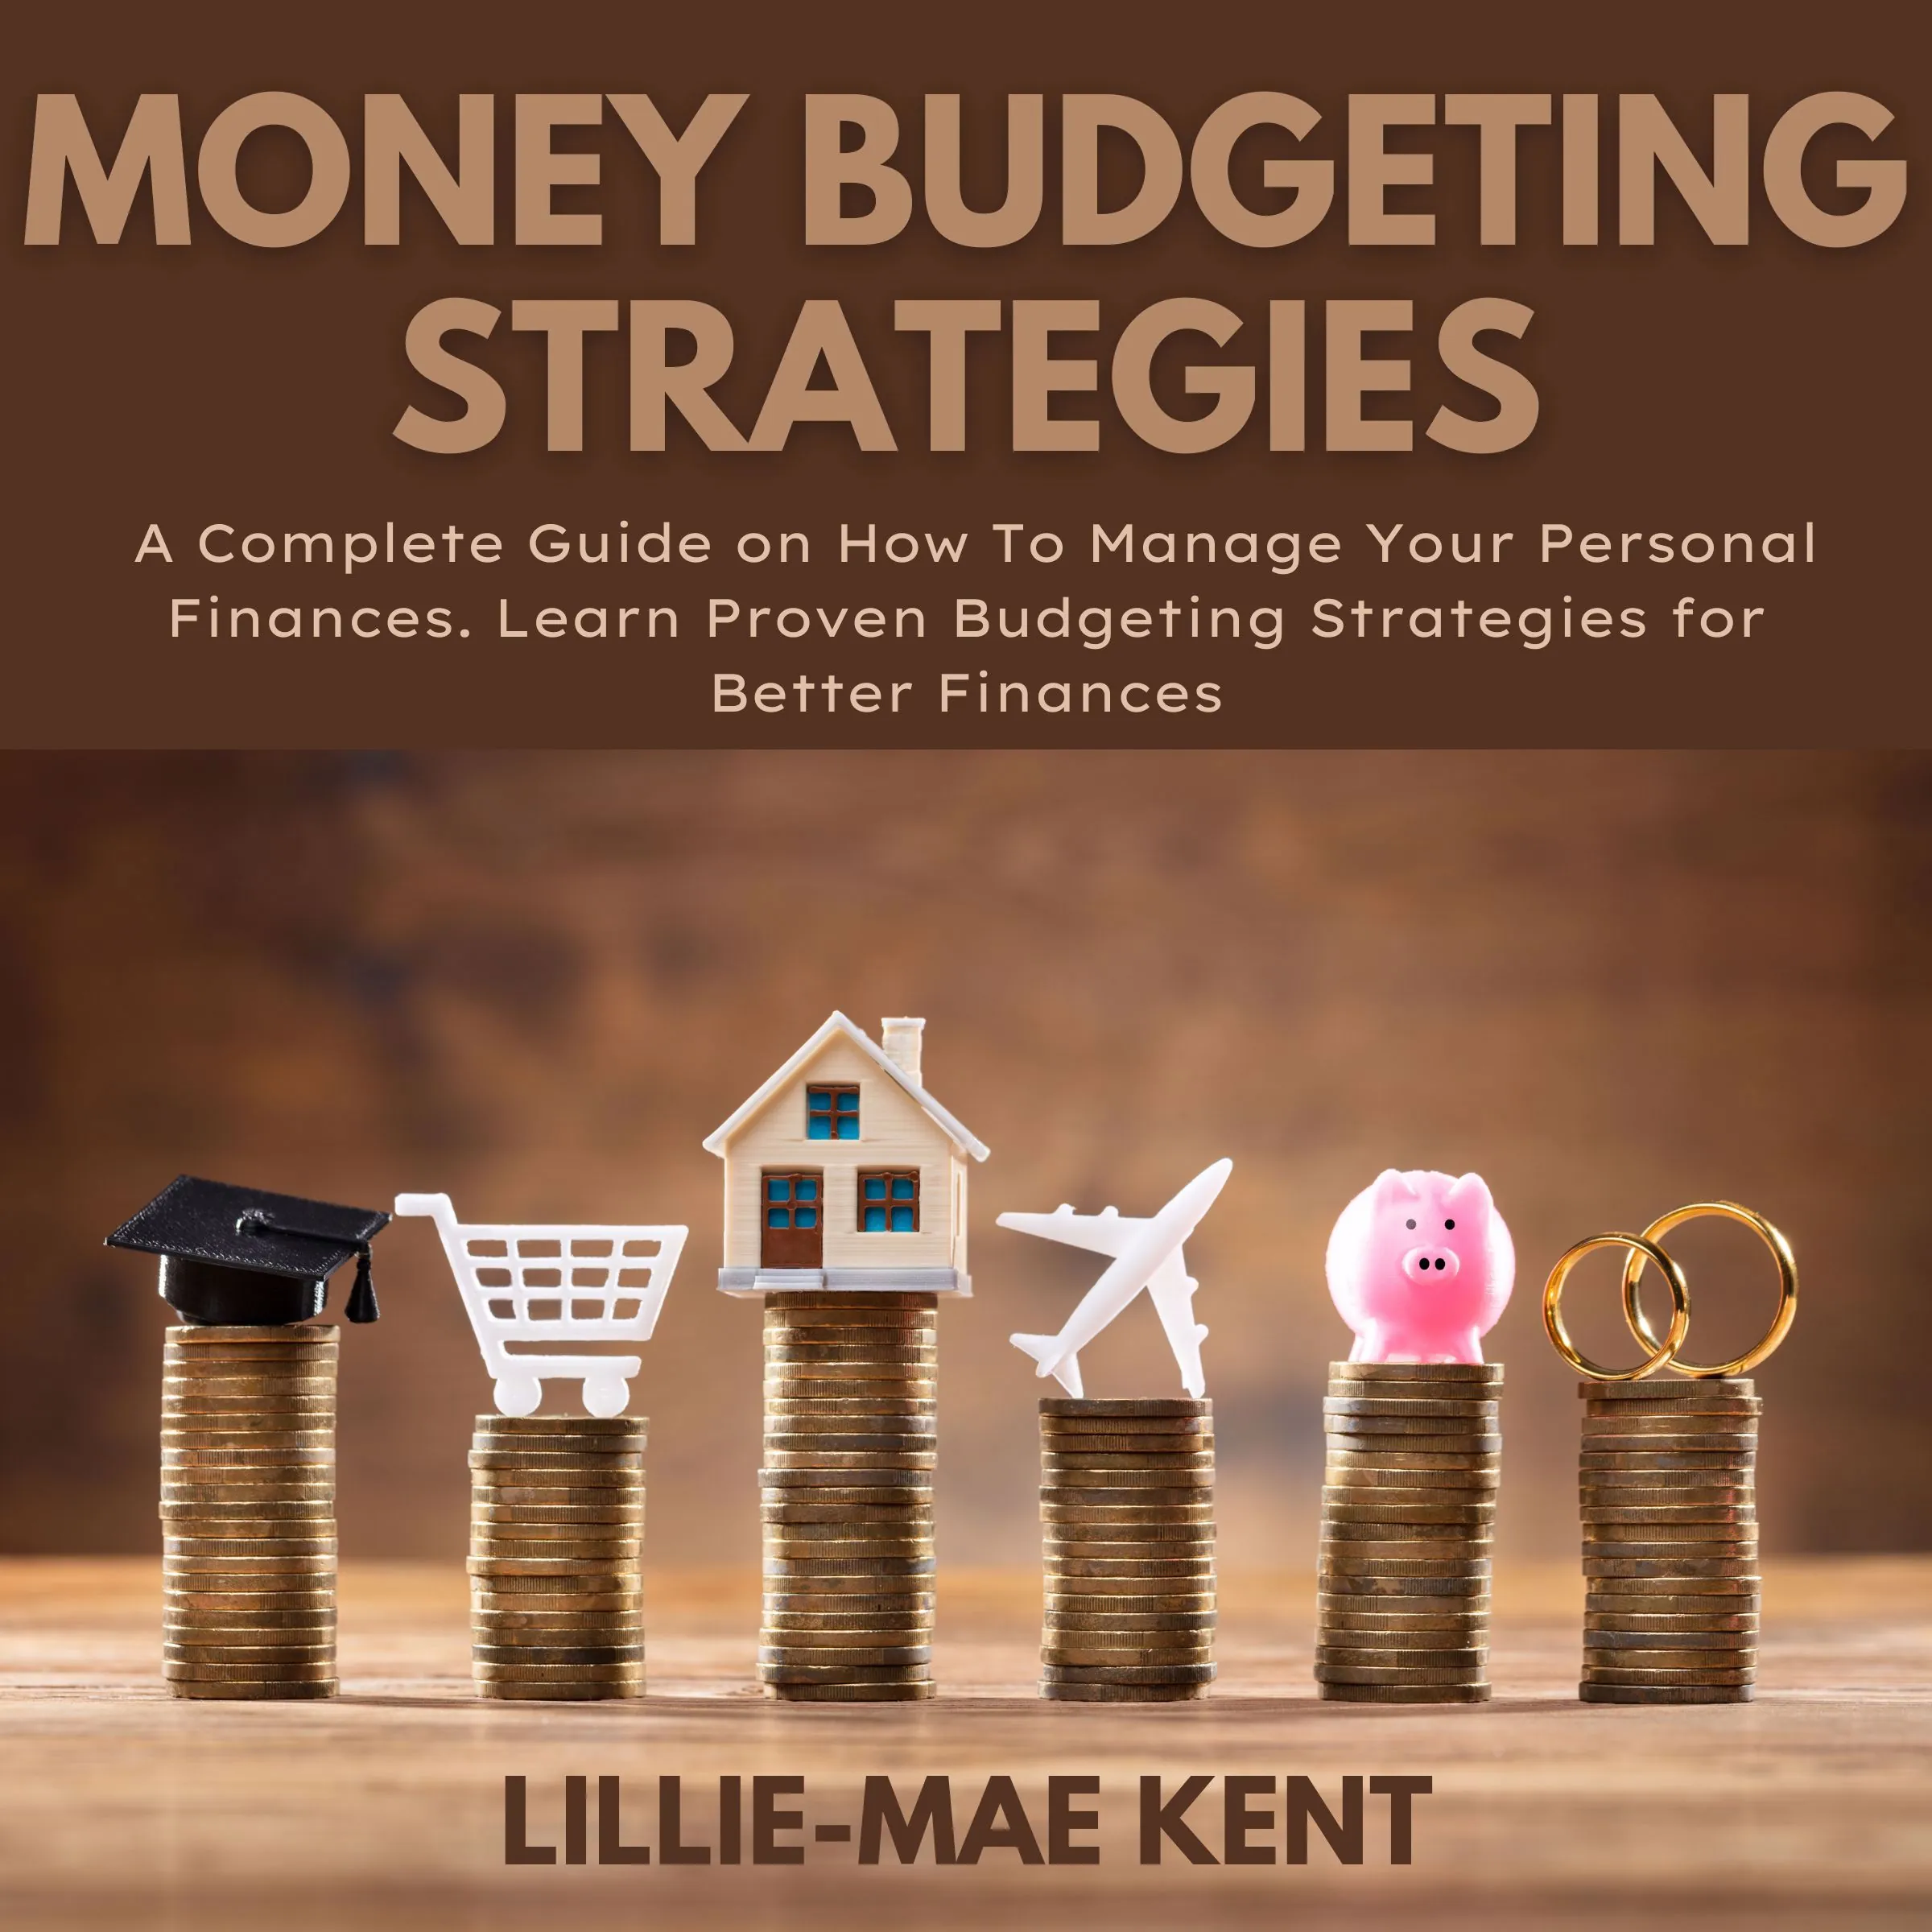 Money Budgeting Strategies by Lillie-Mae Kent Audiobook